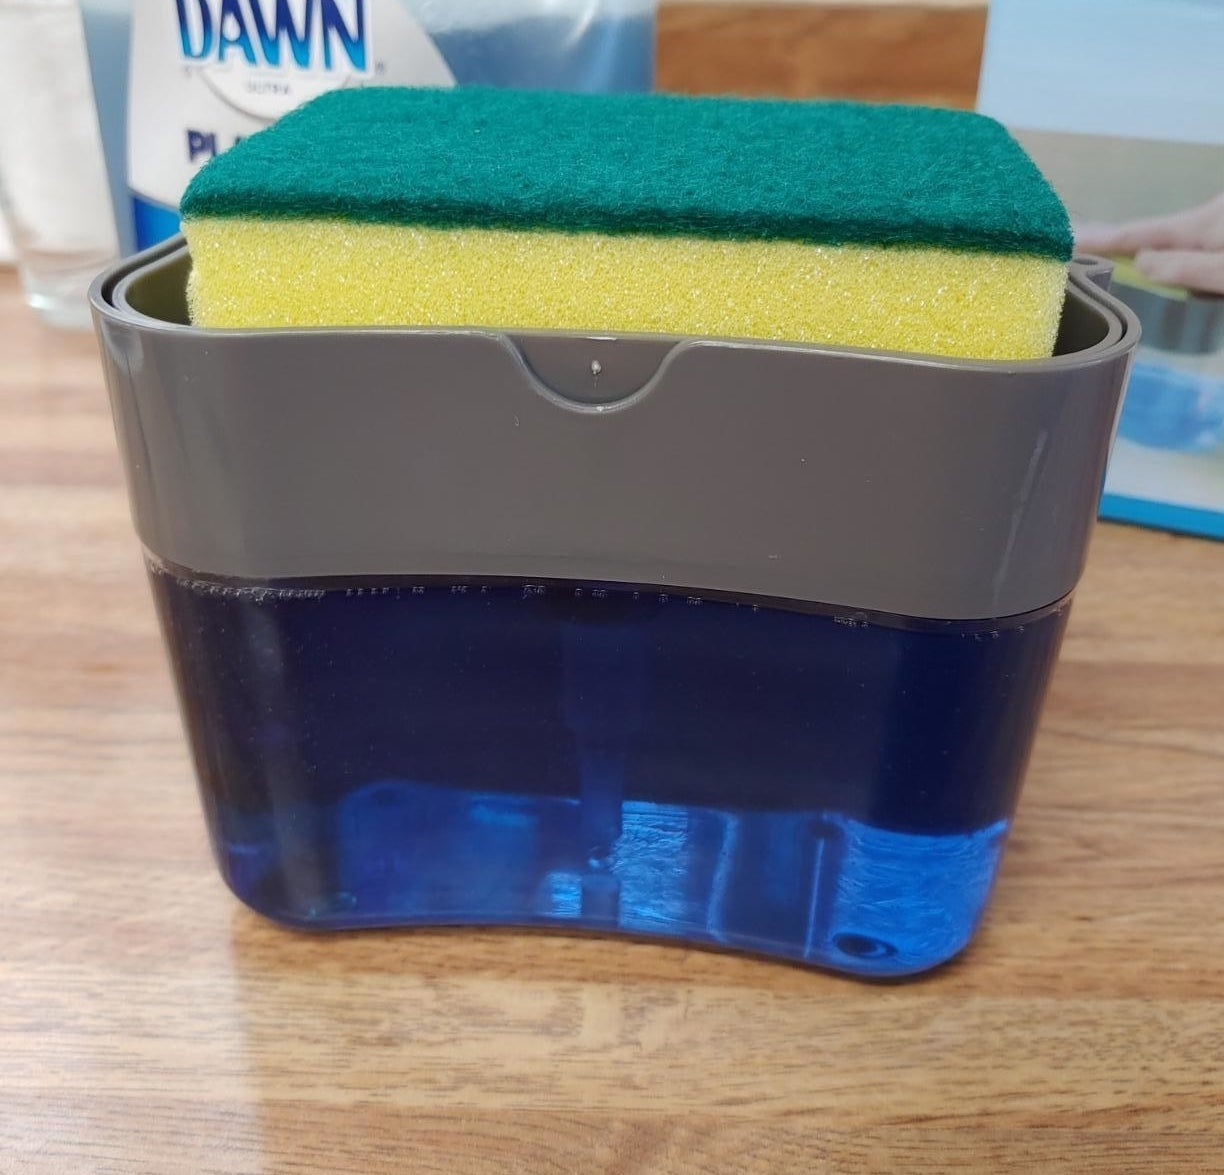  OXO Good Grips Stainless Steel Soap Dispensing Sponge Holder -  Clear, One Size : Everything Else